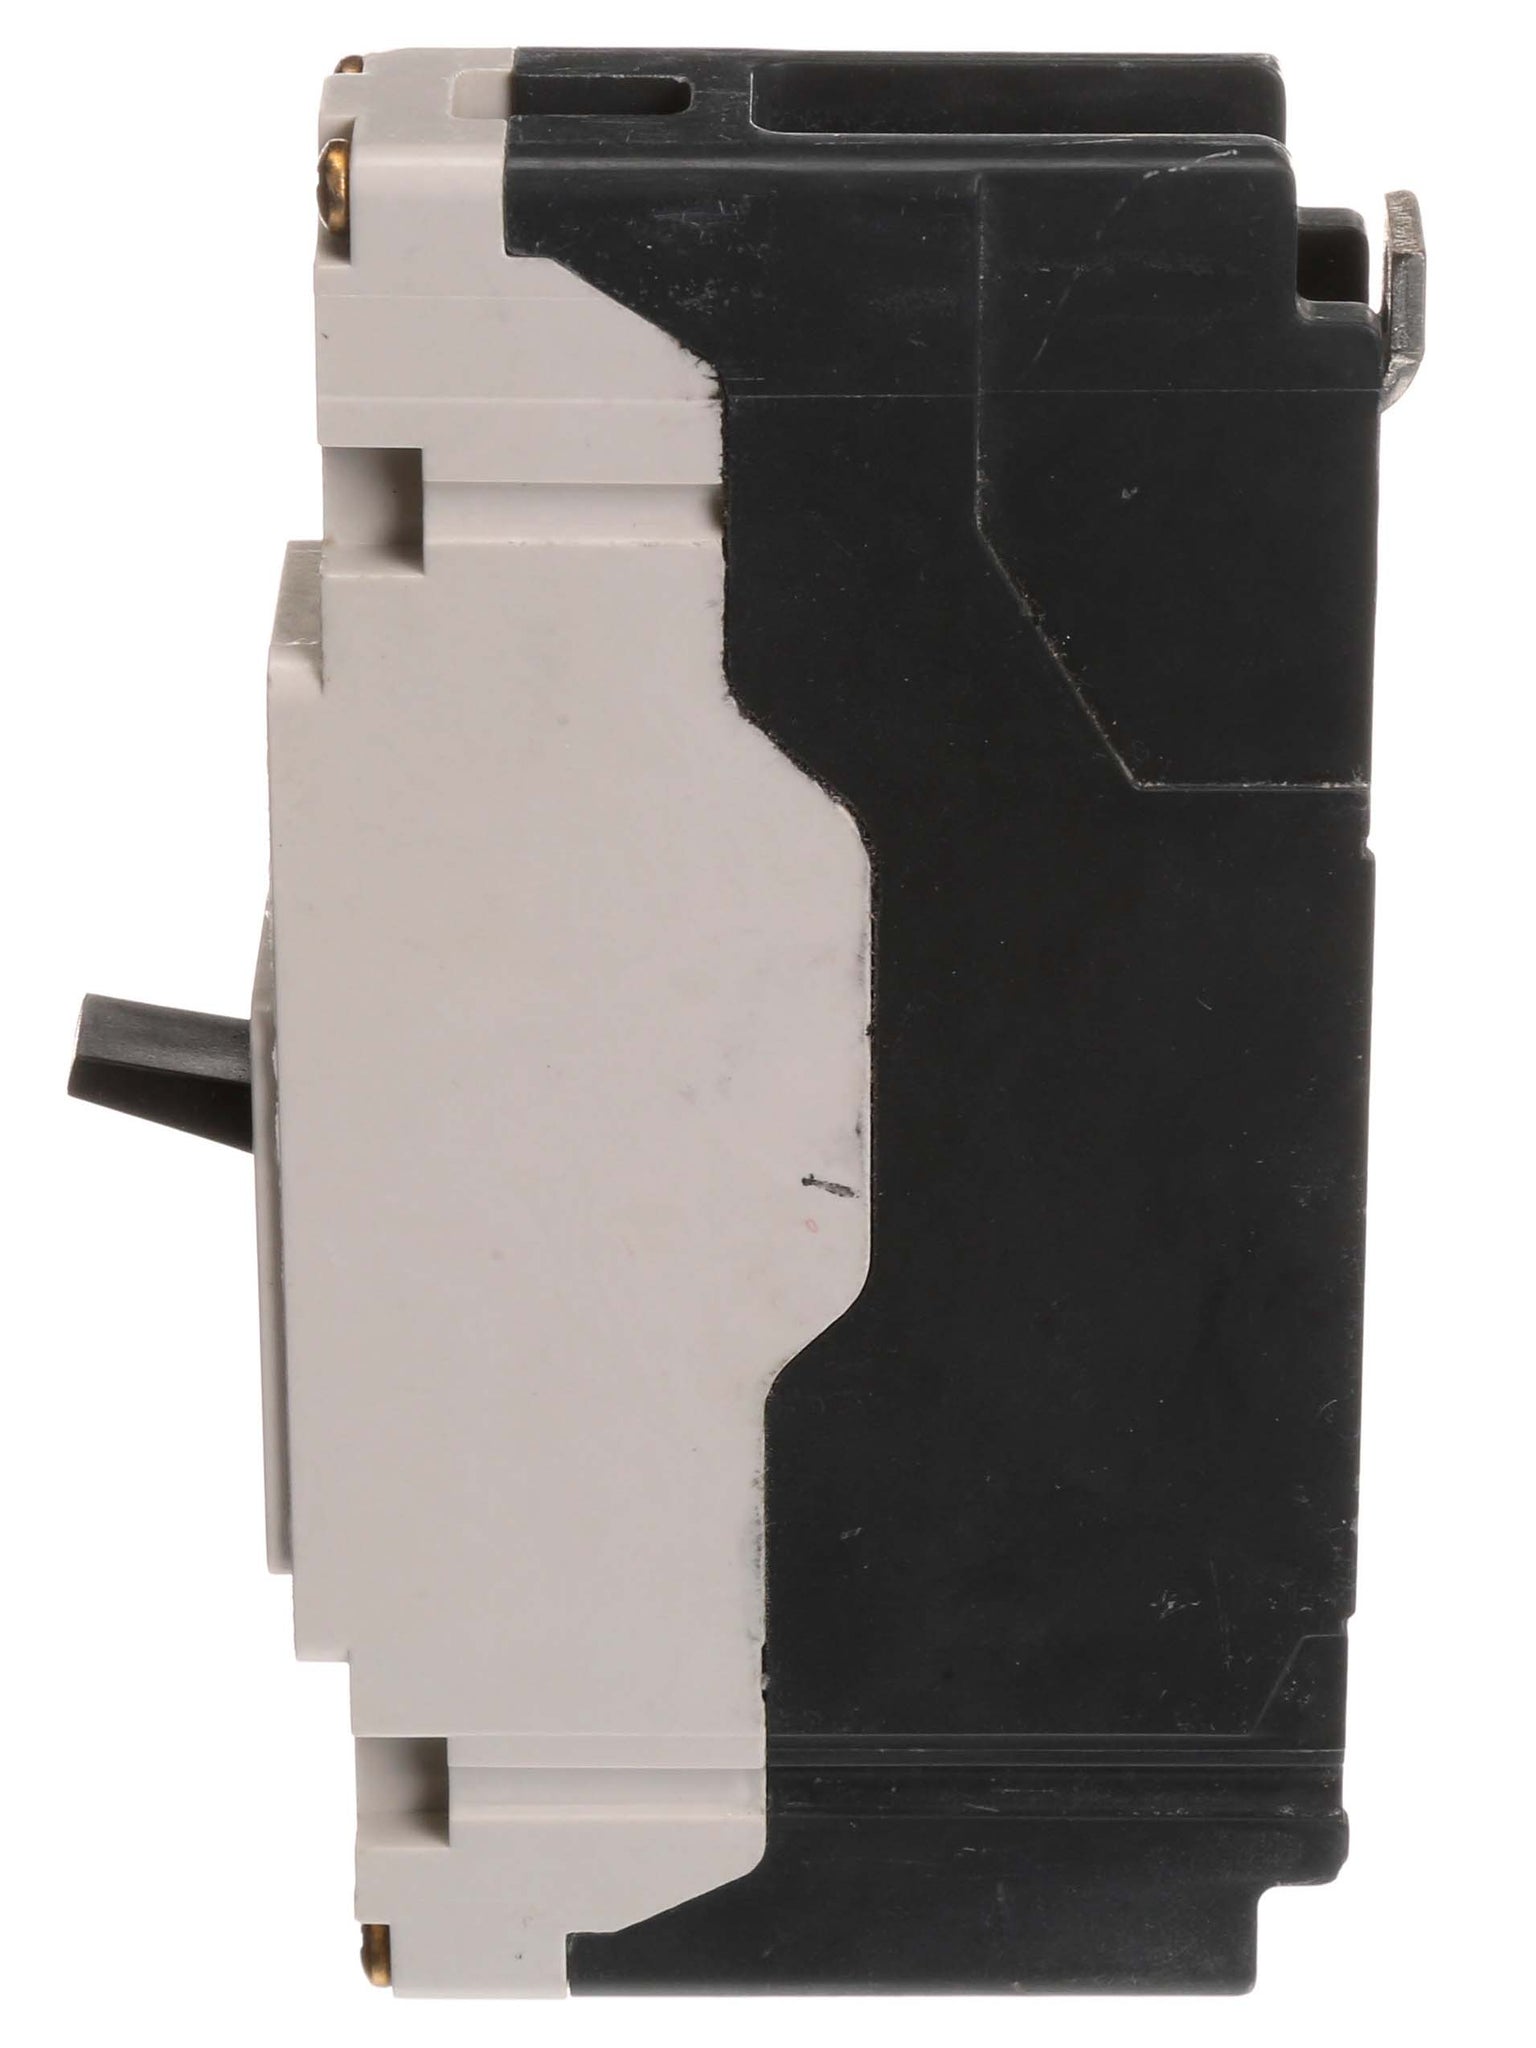 HEB1B015B - Siemens - Molded Case Circuit Breaker